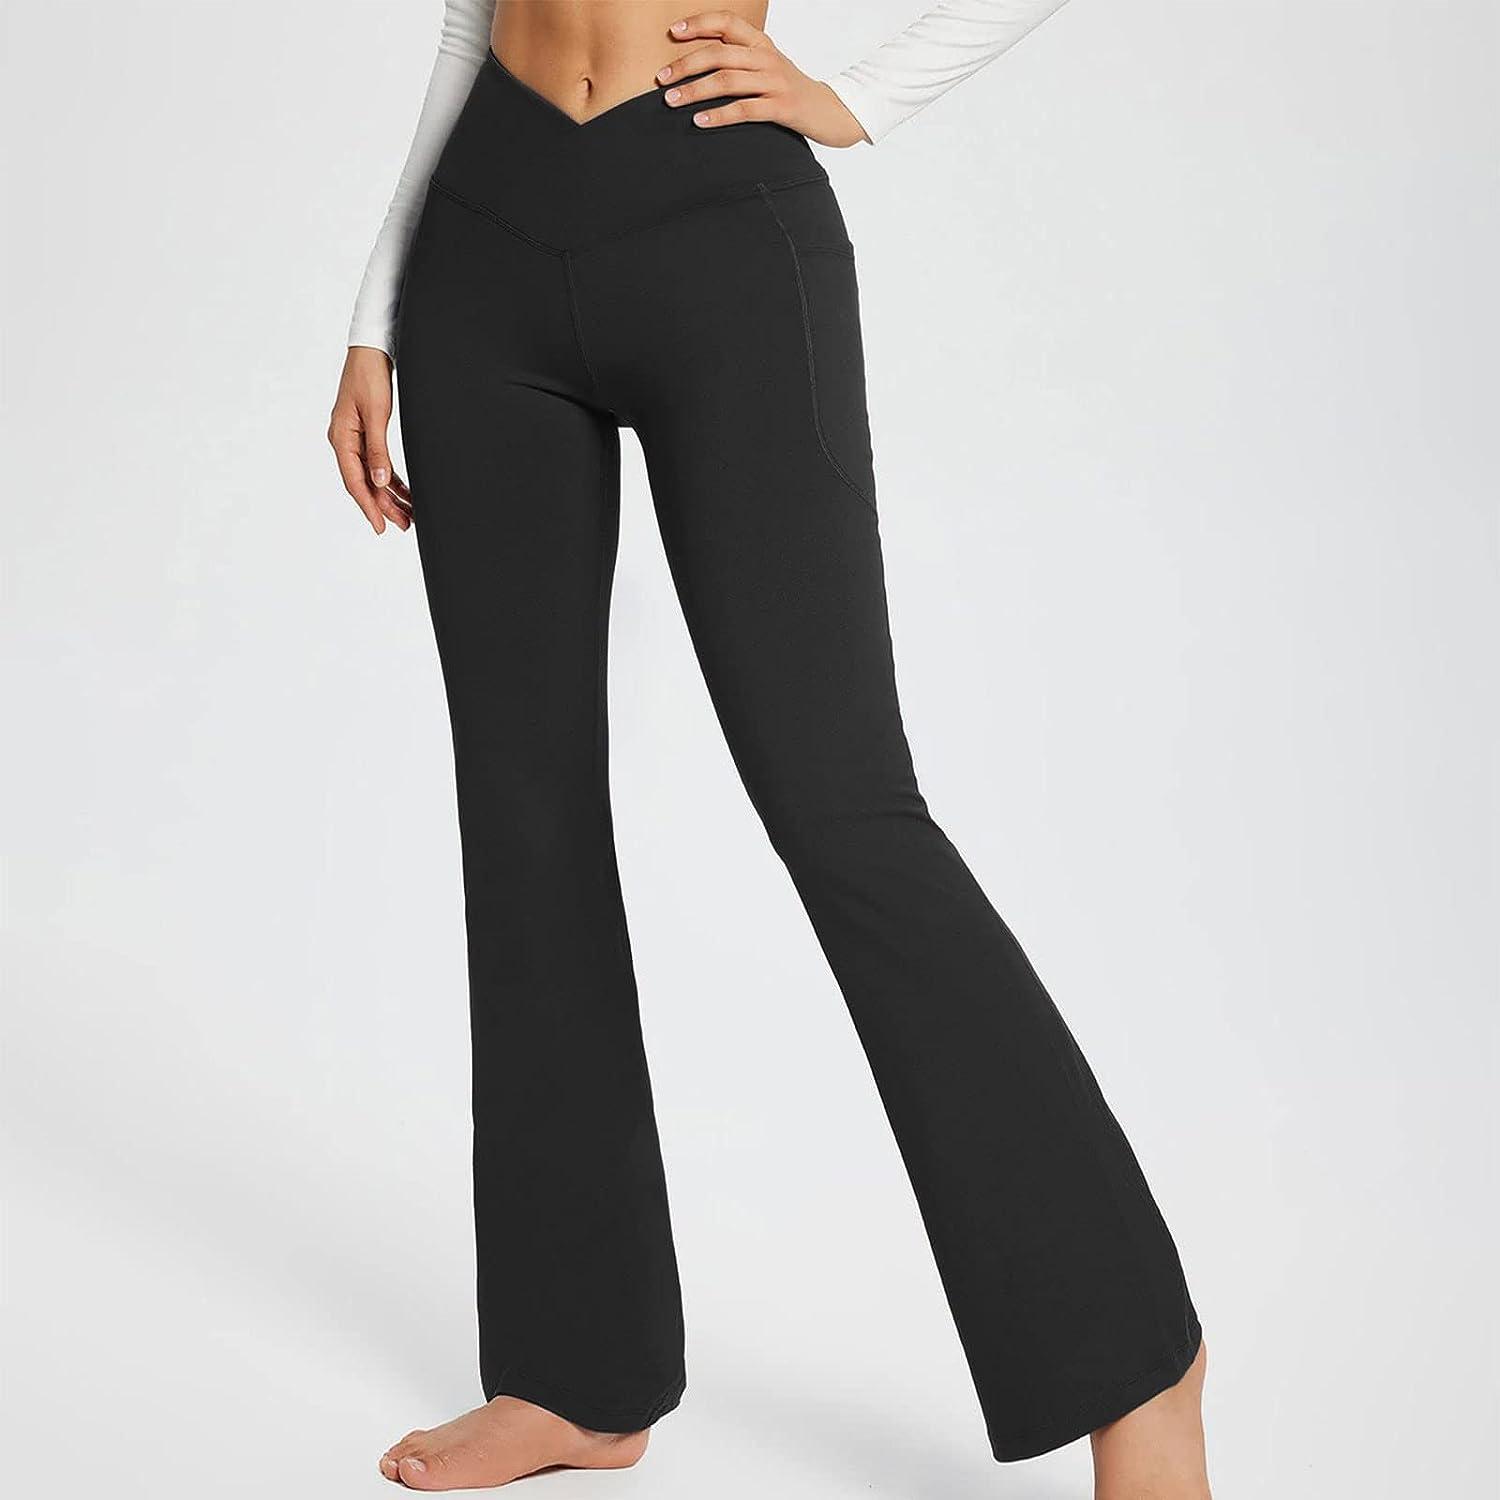 black flare yoga pant leggings in the size medium. - Depop